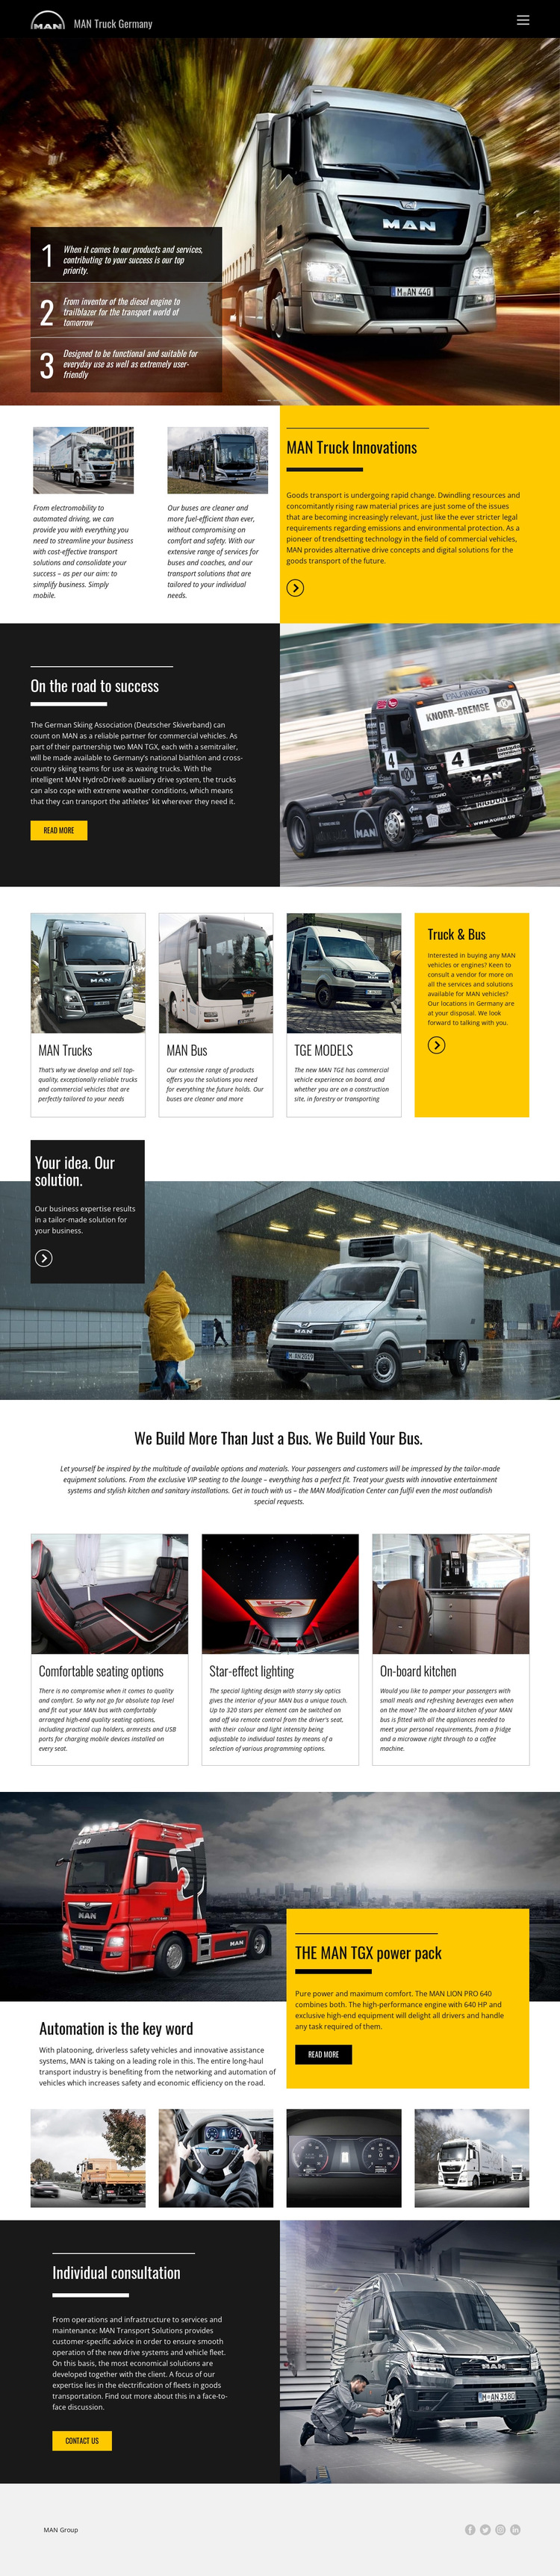 Man trucks for transportation HTML5 Template